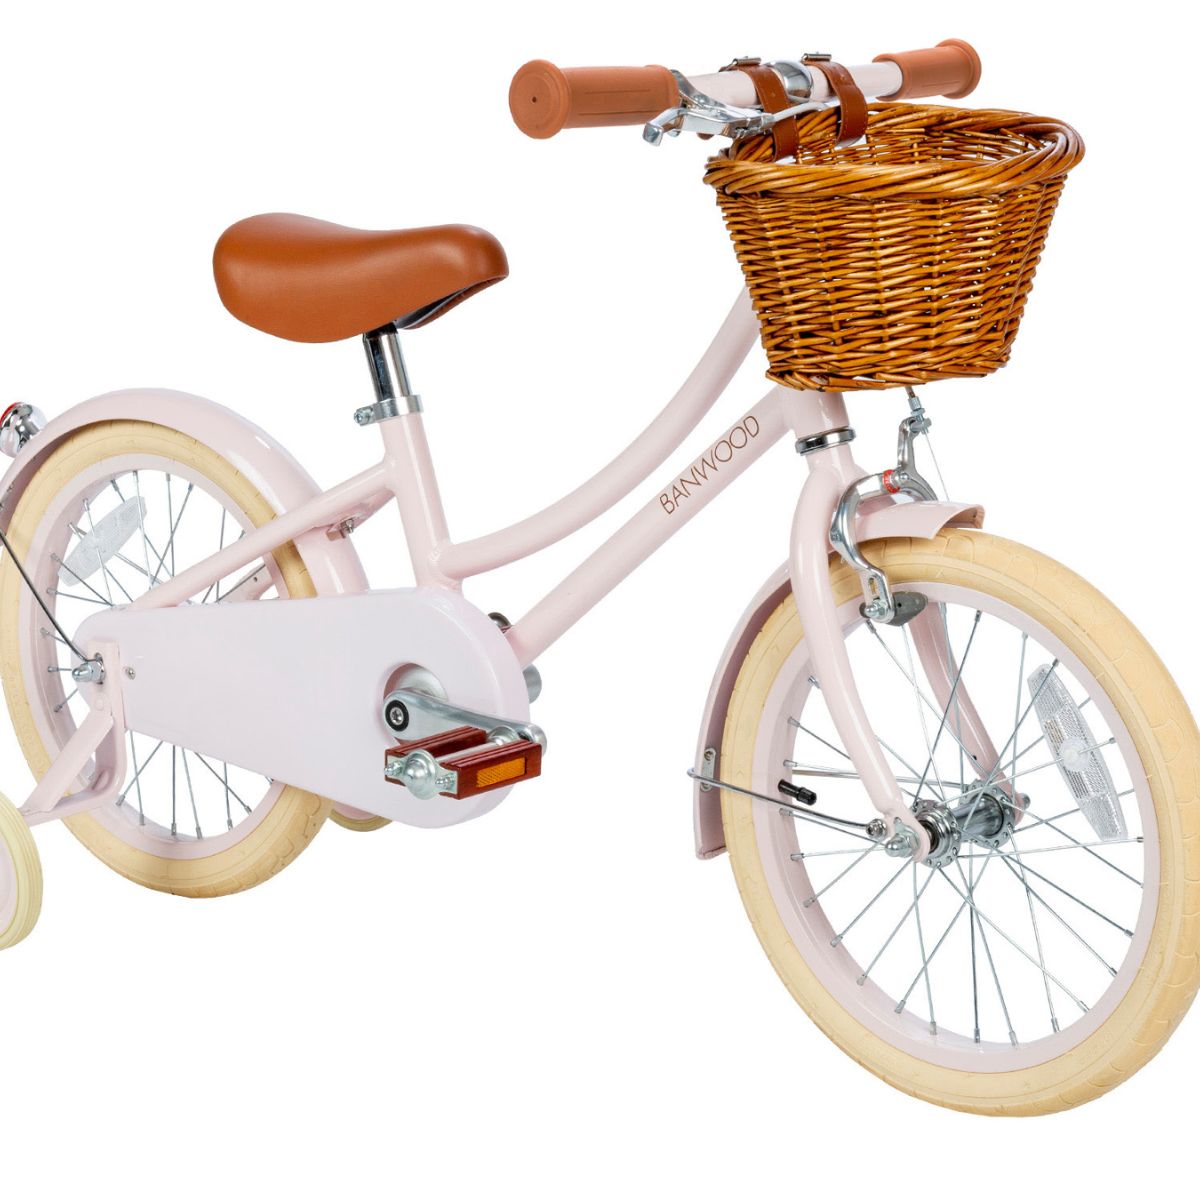 Bicicleta Banwood clásica vintage menta pálida